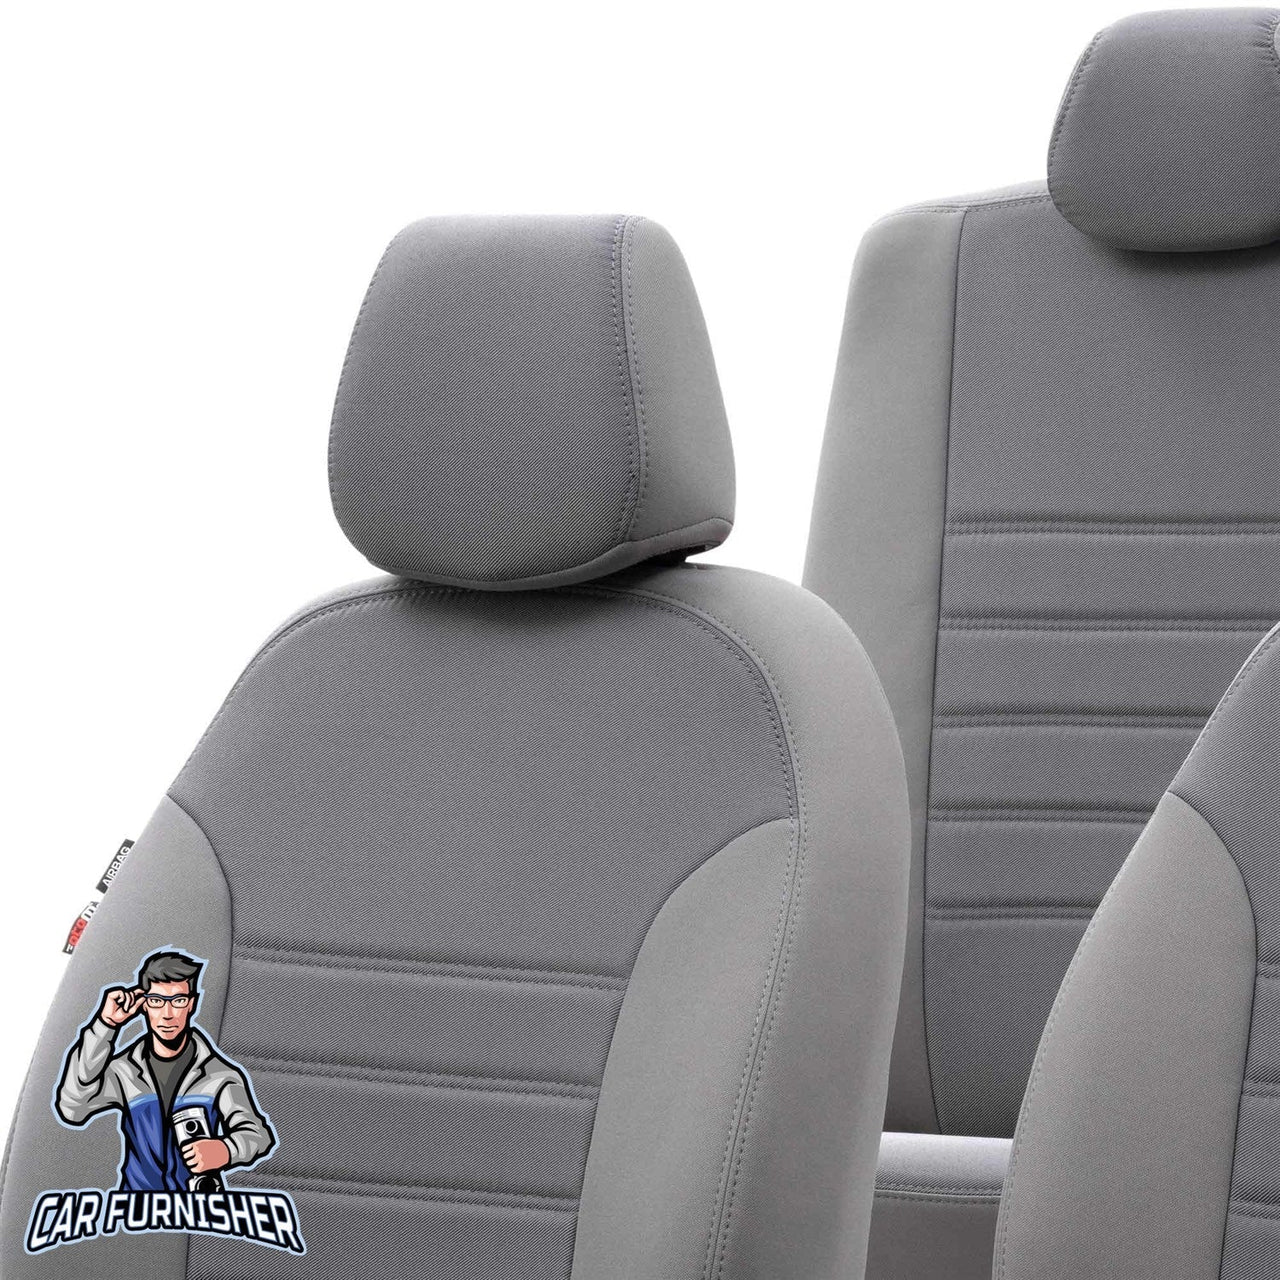 Volkswagen Touareg Seat Cover Original Jacquard Design Gray Jacquard Fabric